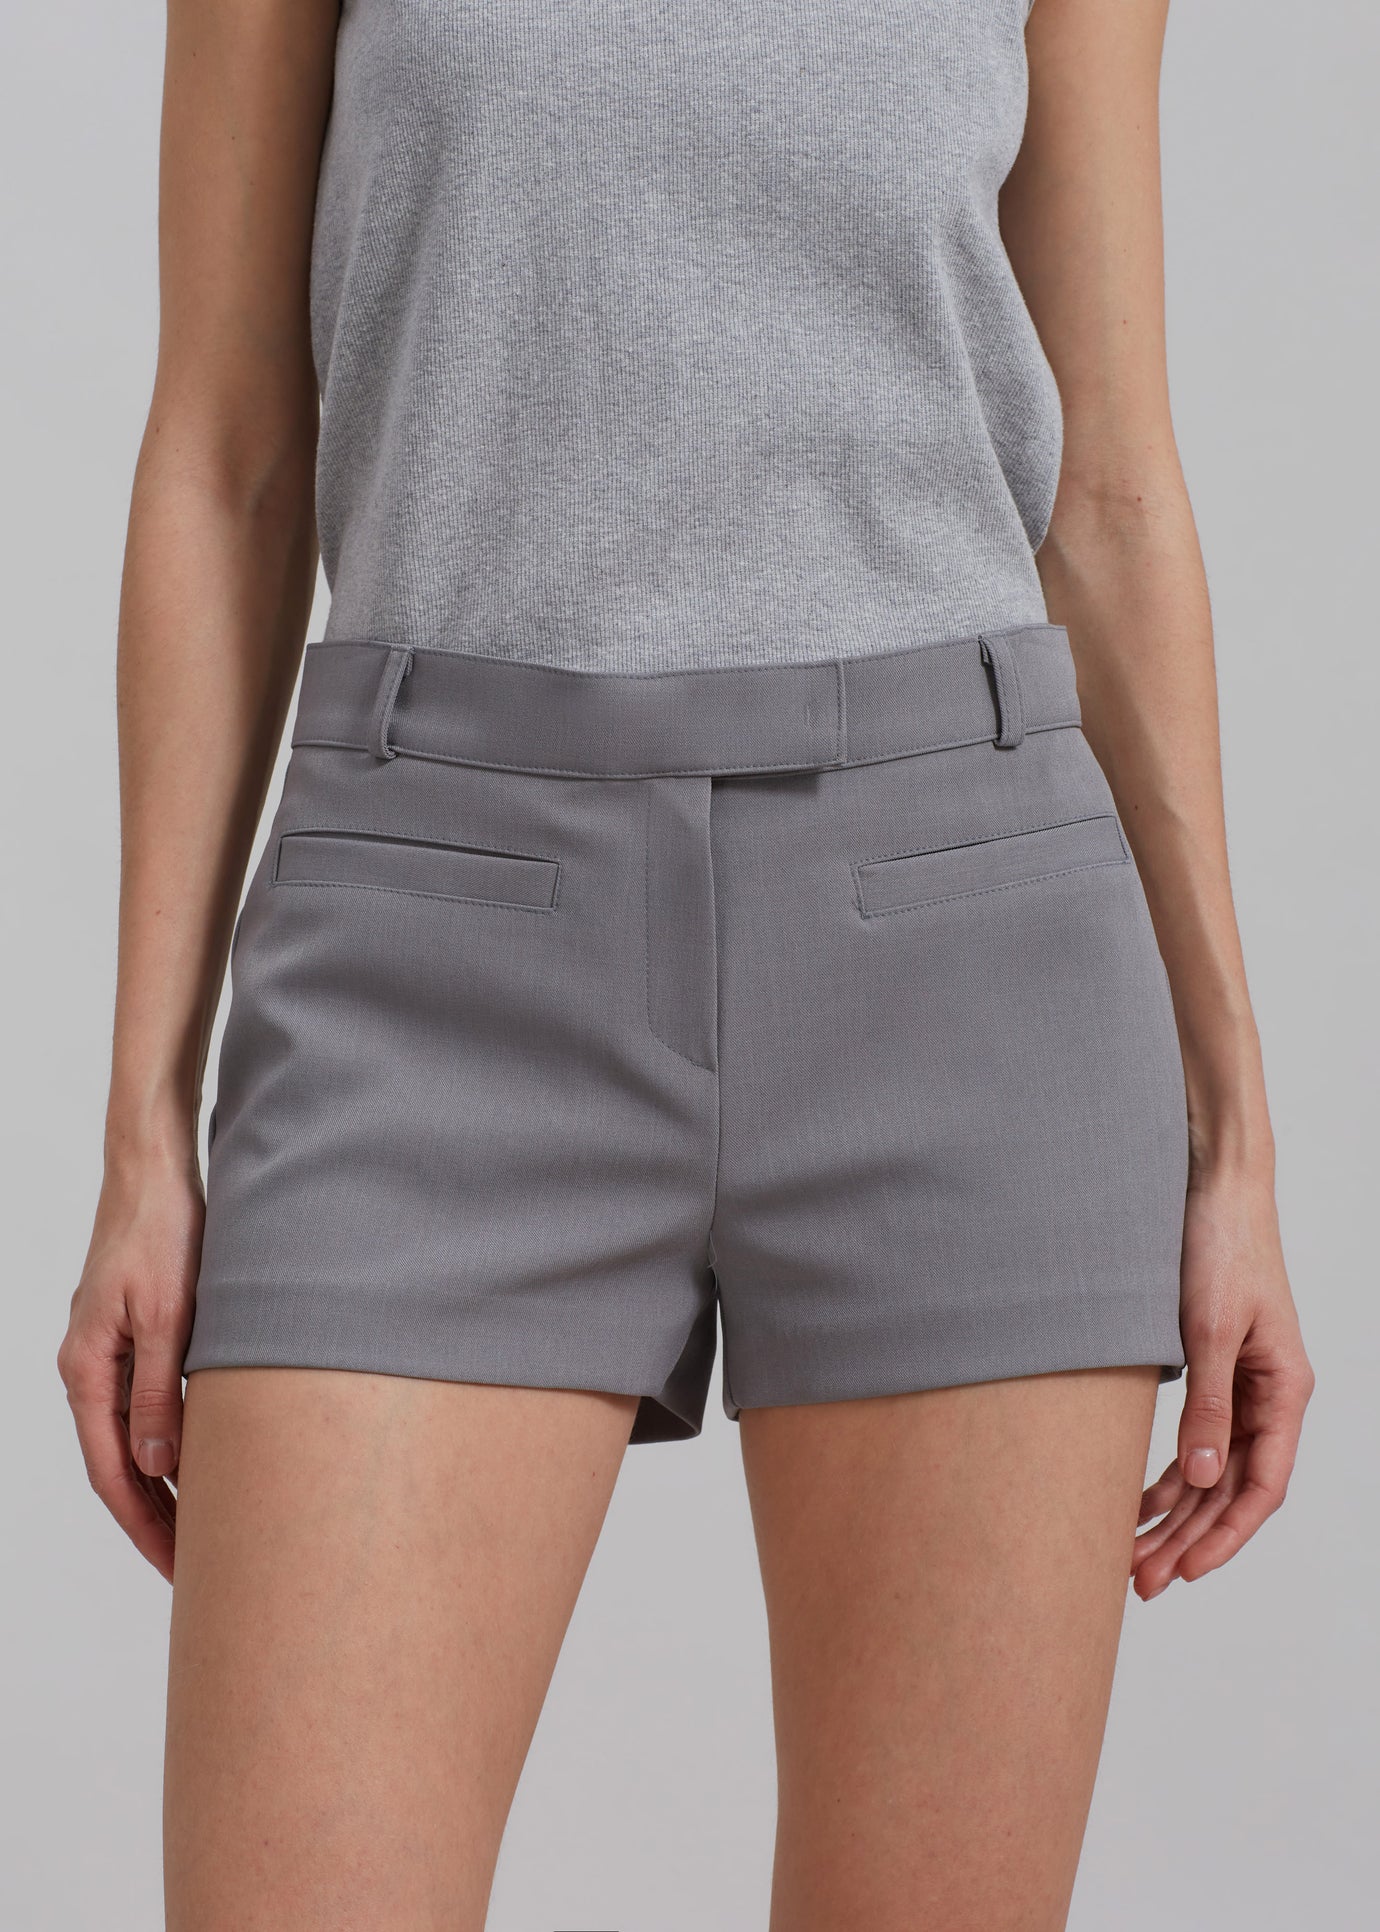 Women's Shorts – The Frankie Shop